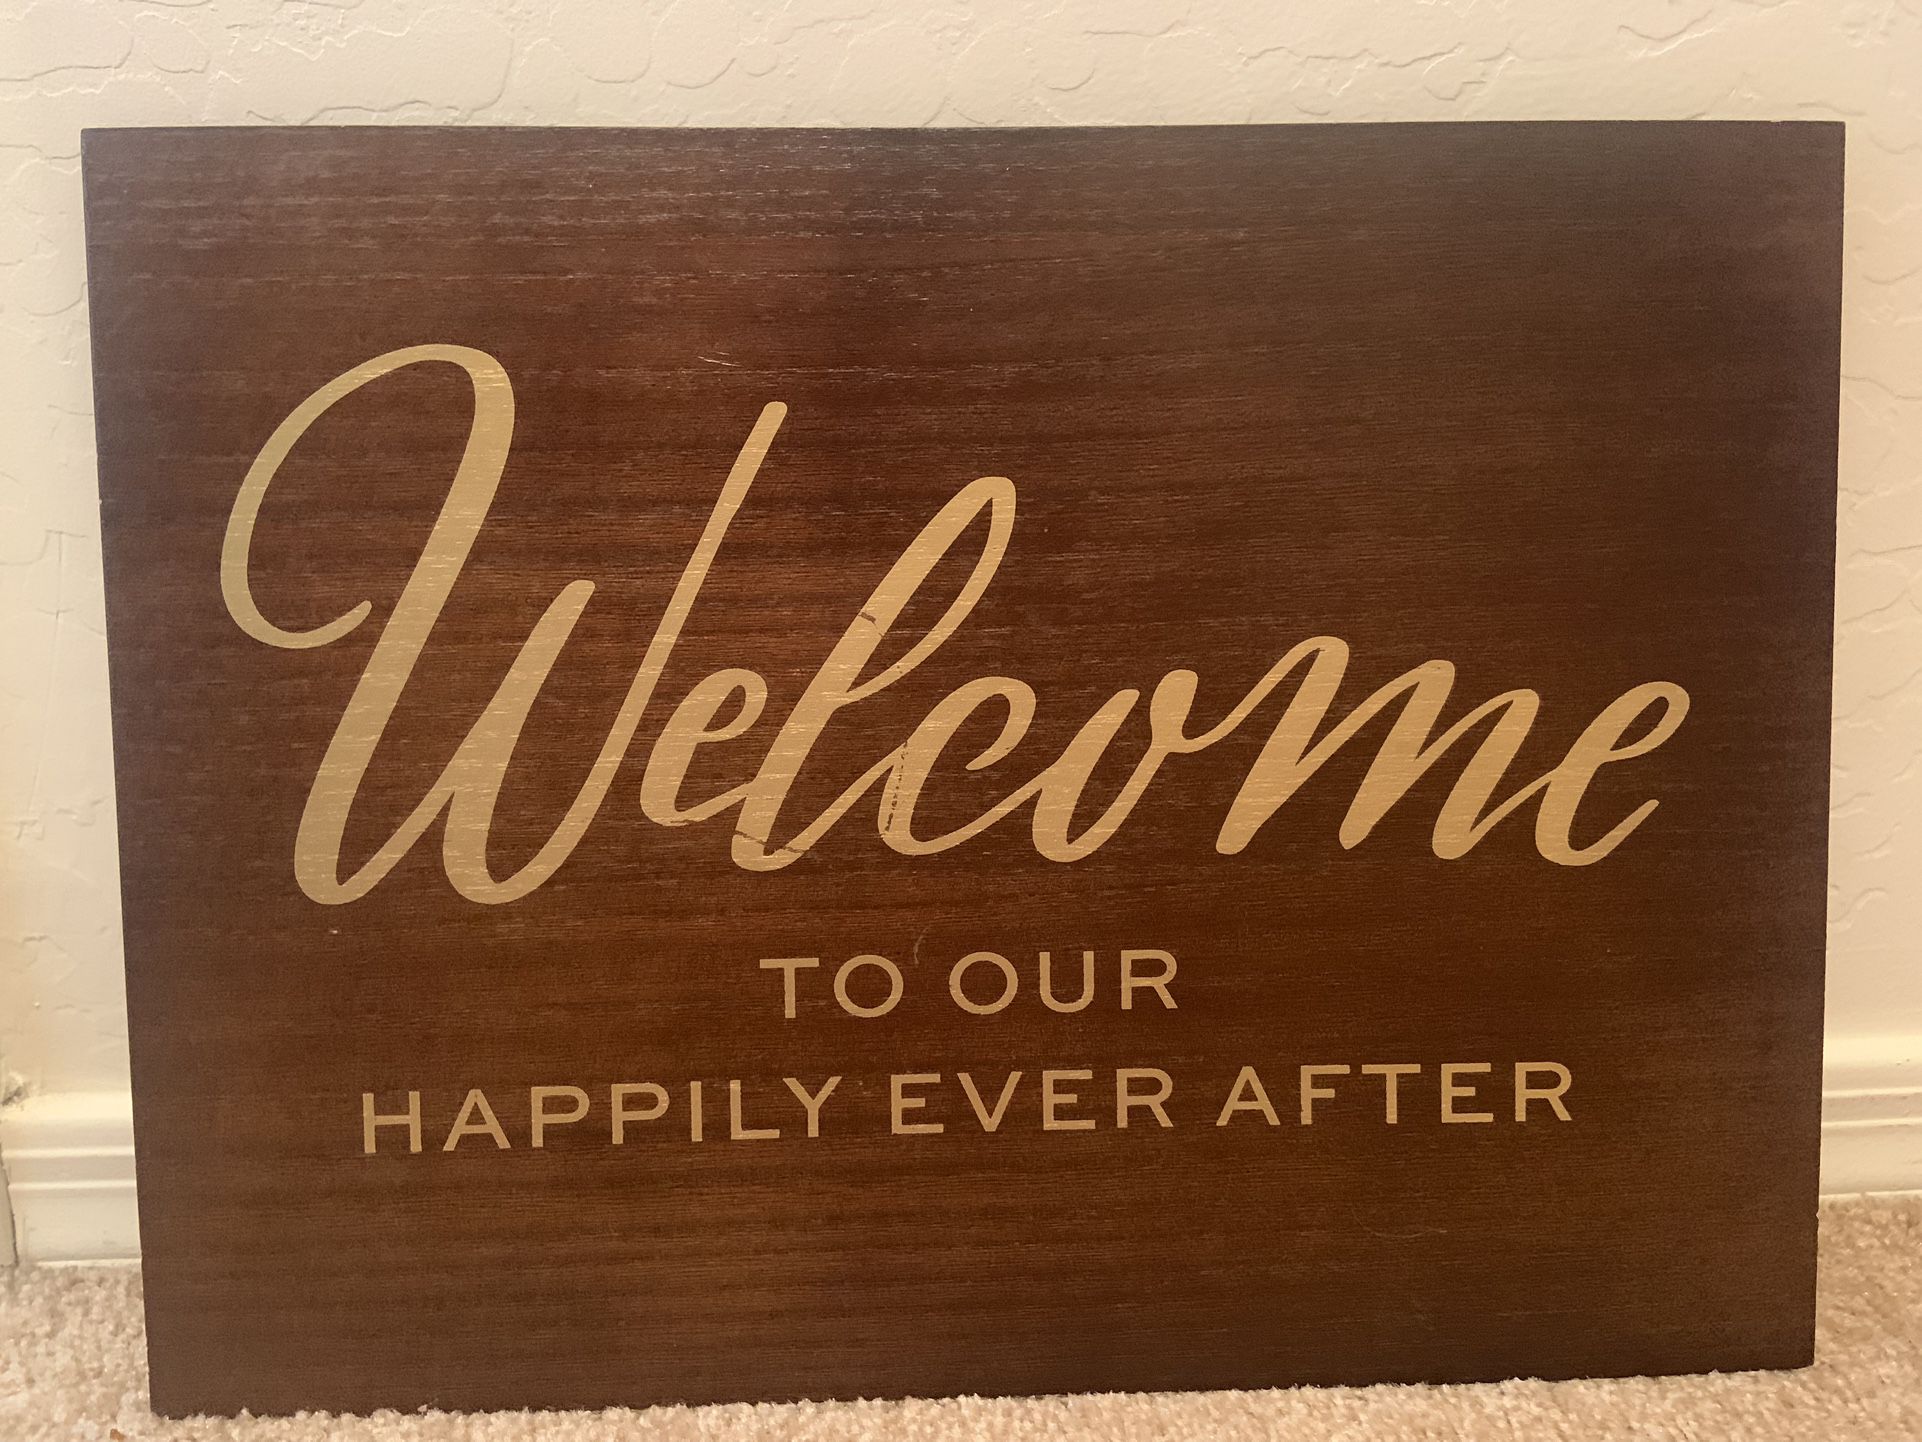 Welcome Wedding Sign 